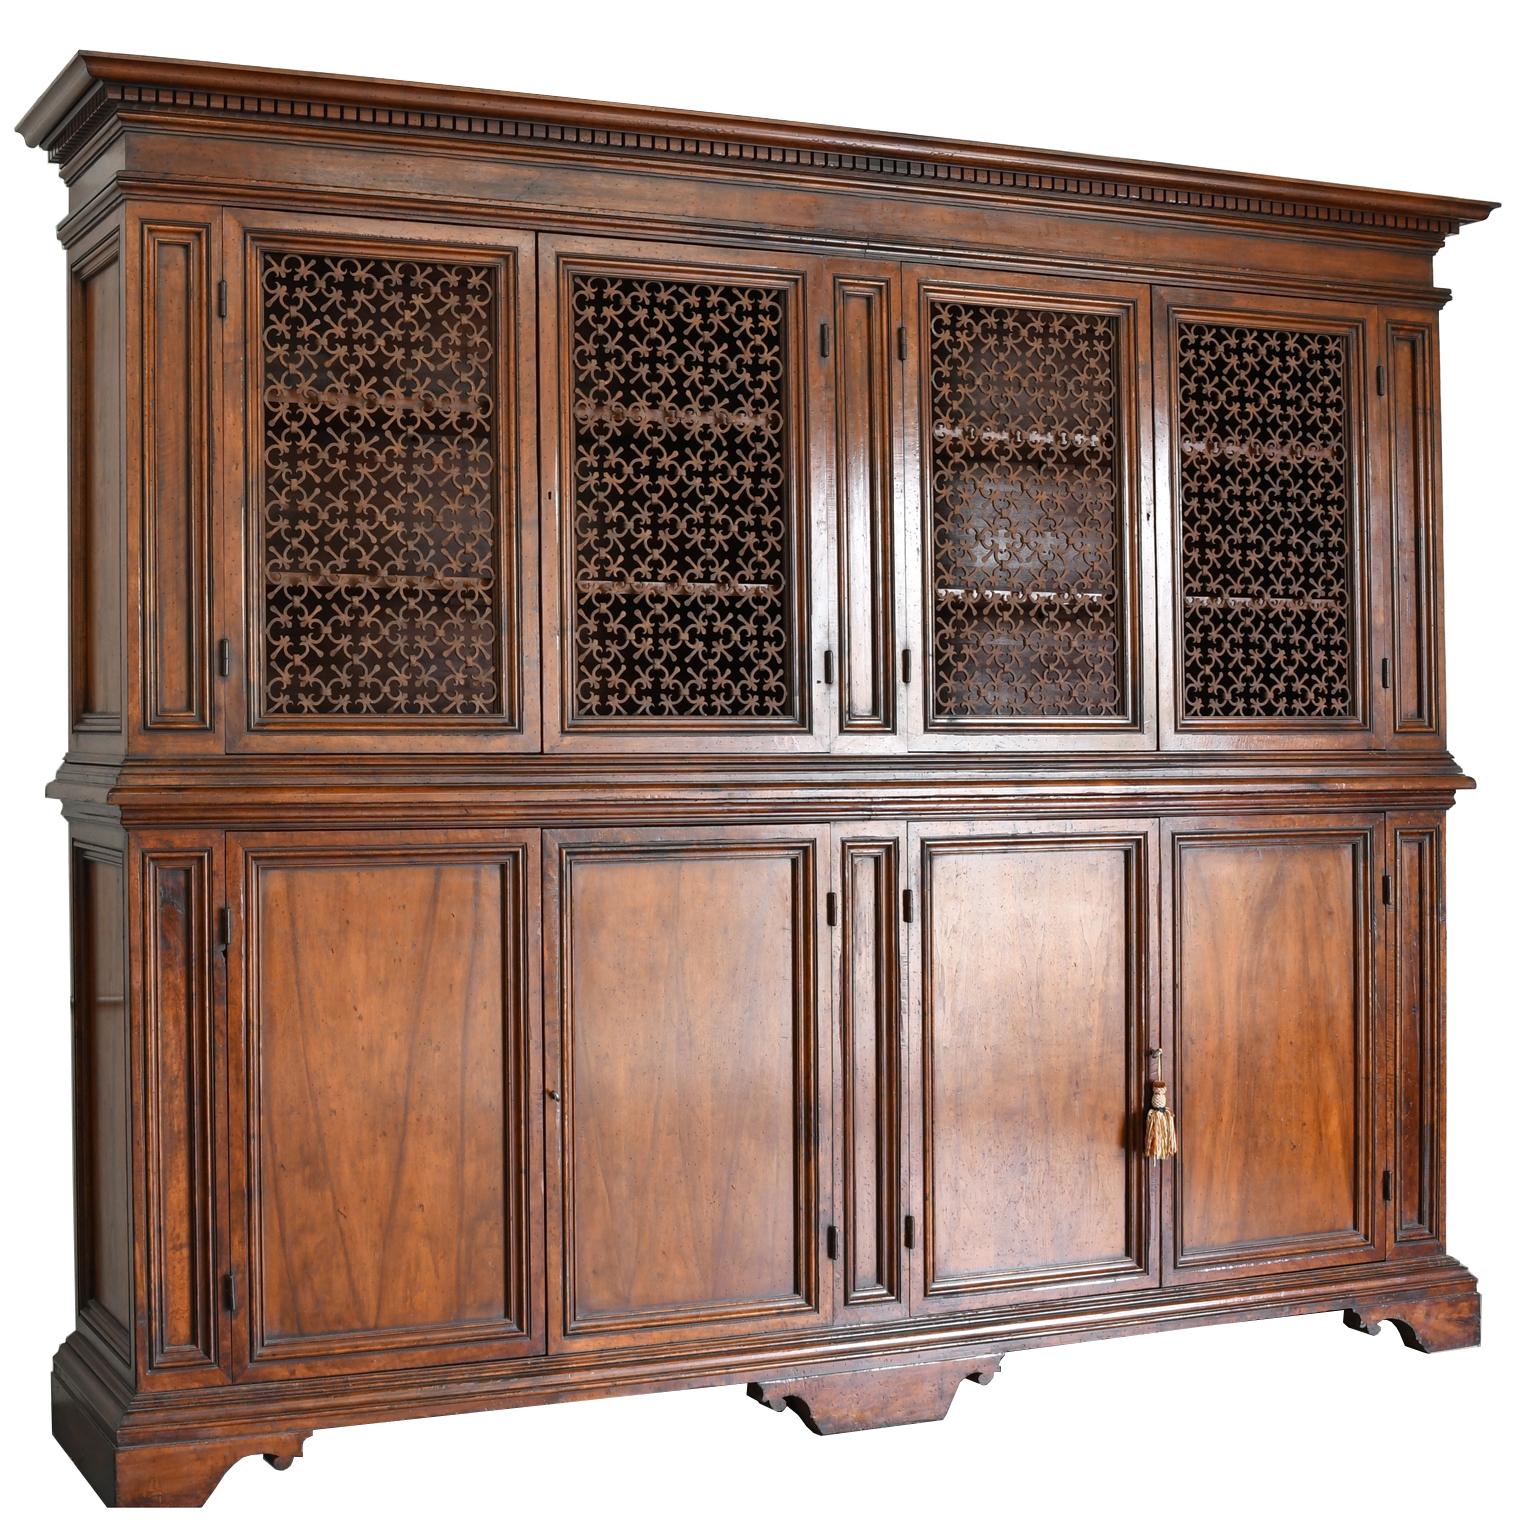 American Italian Renaissance Style Walnut Bookcase Cabinet with Iron Quatrefoil Panels